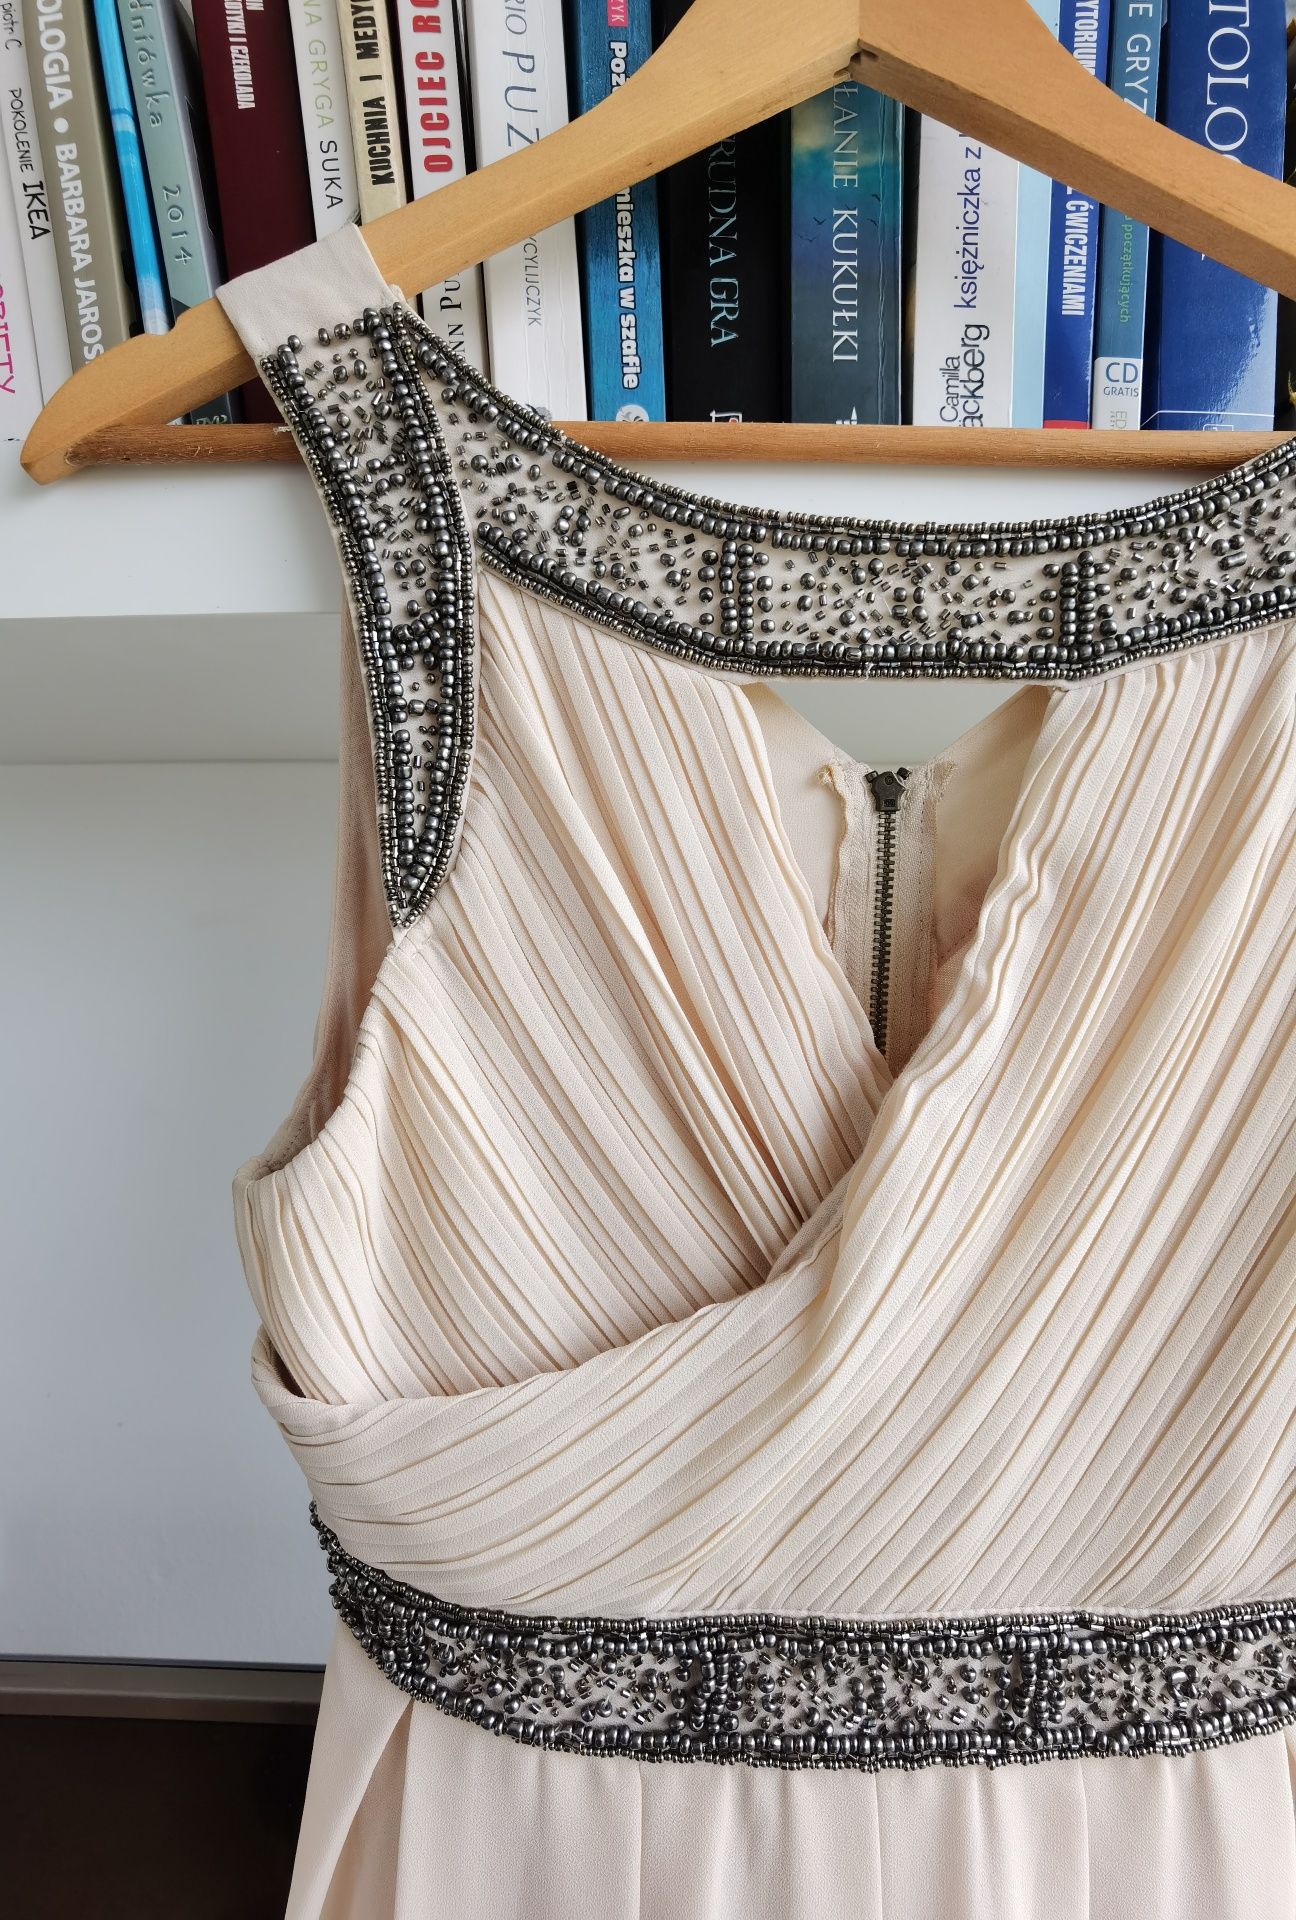 Elegancka plisowana kremowa sukienka S M grecka asos wesele studniówka